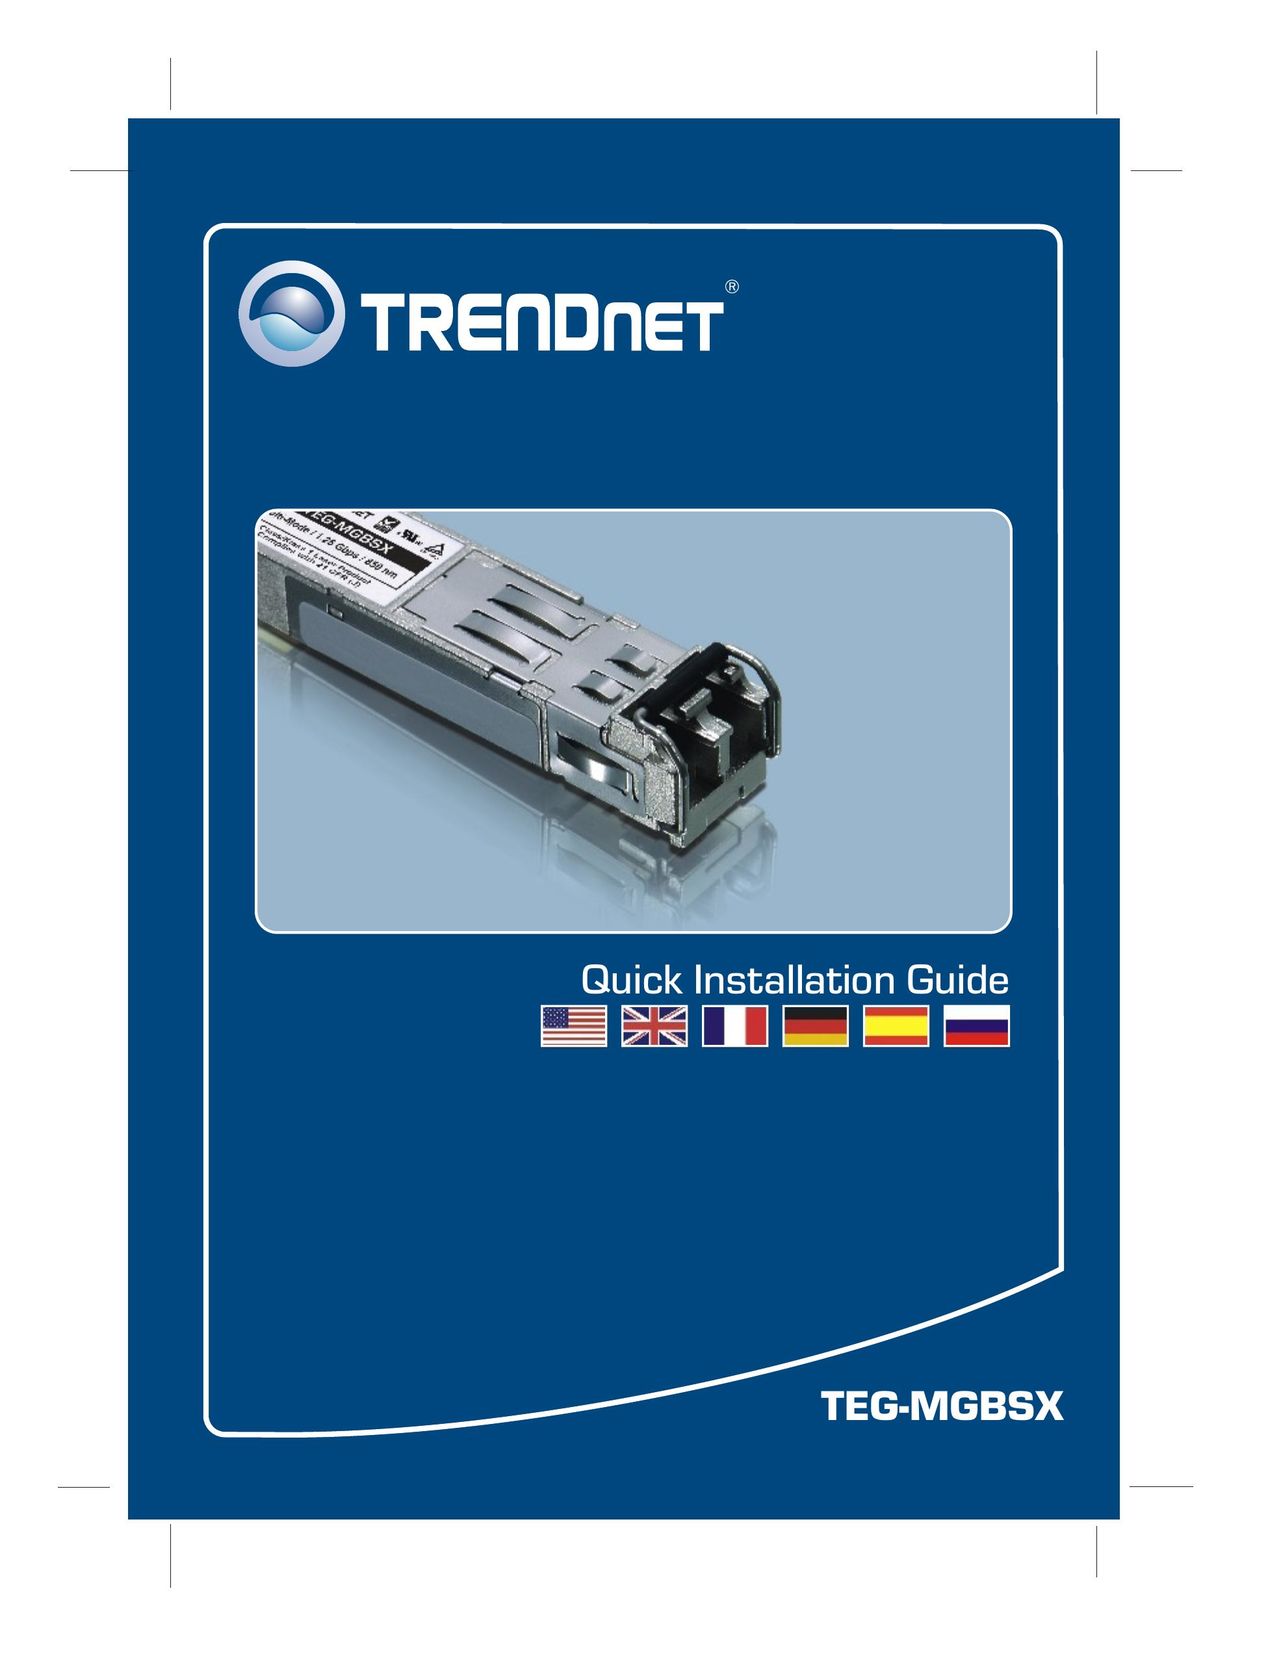 TRENDnet TEG-MGBSX Network Card User Manual